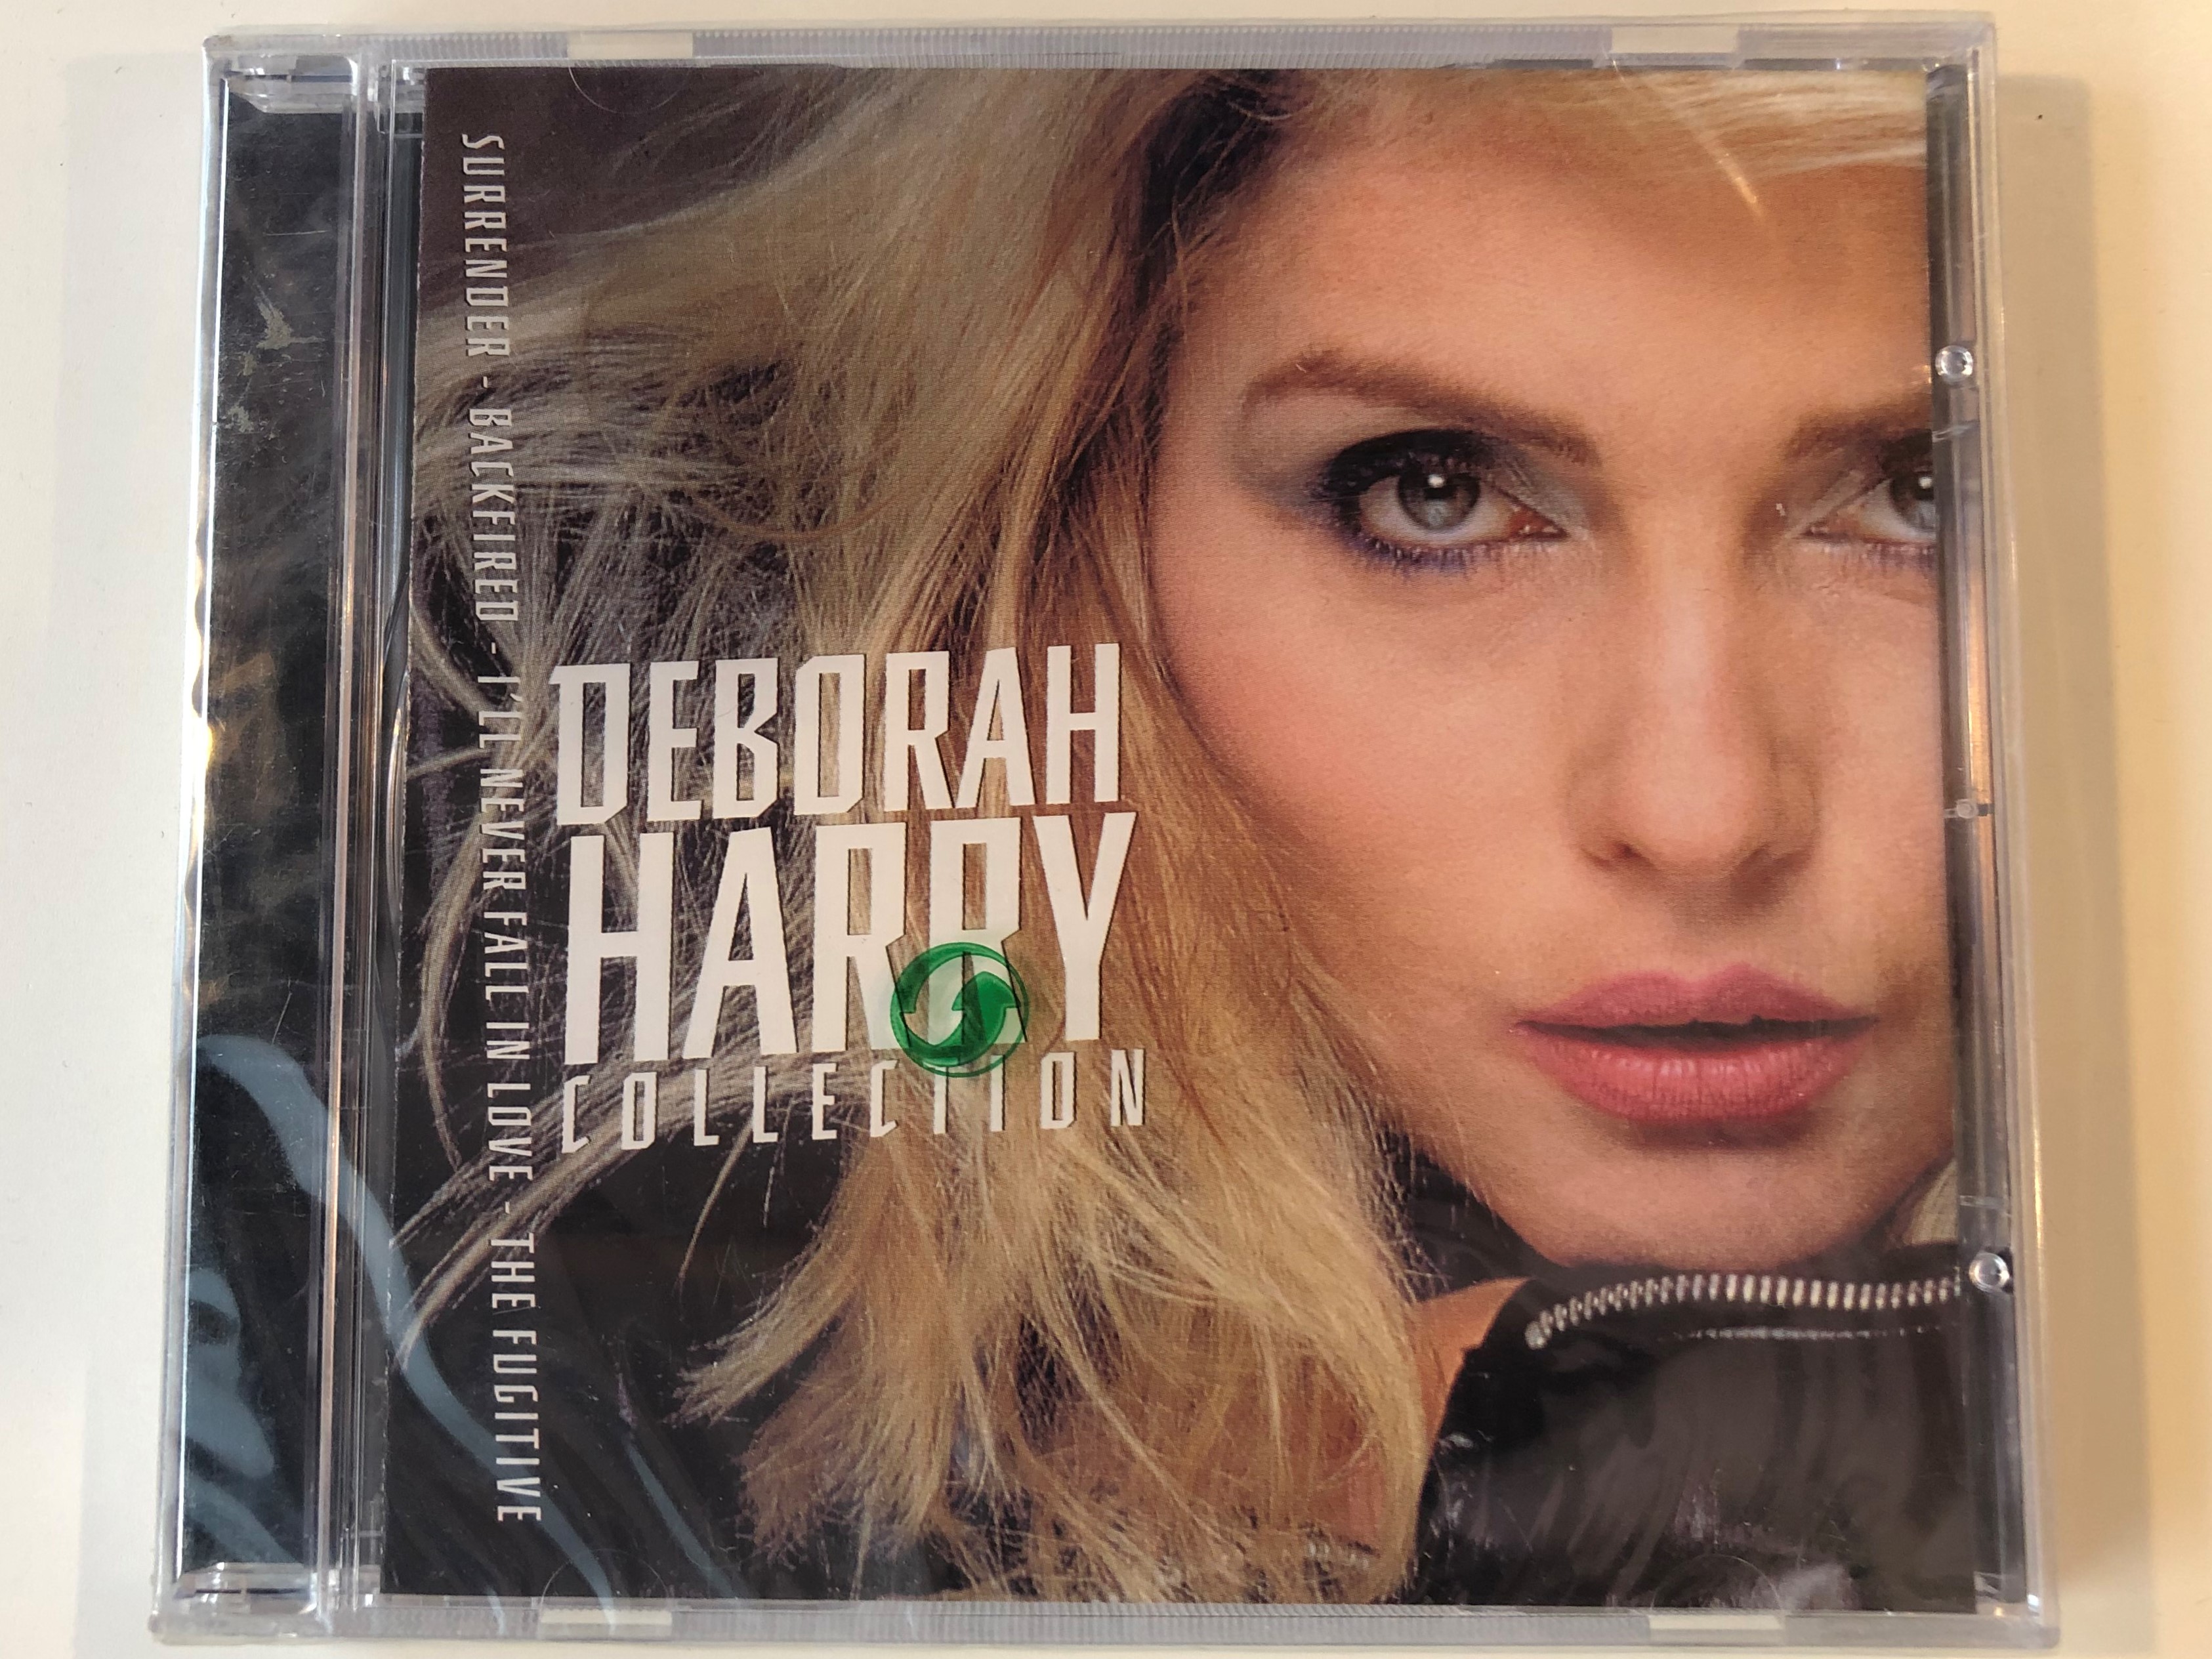 deborah-harry-collection-surrender-backfired-i-ll-never-fall-in-love-the-fugitive-disky-audio-cd-1998-dc-888402-1-.jpg